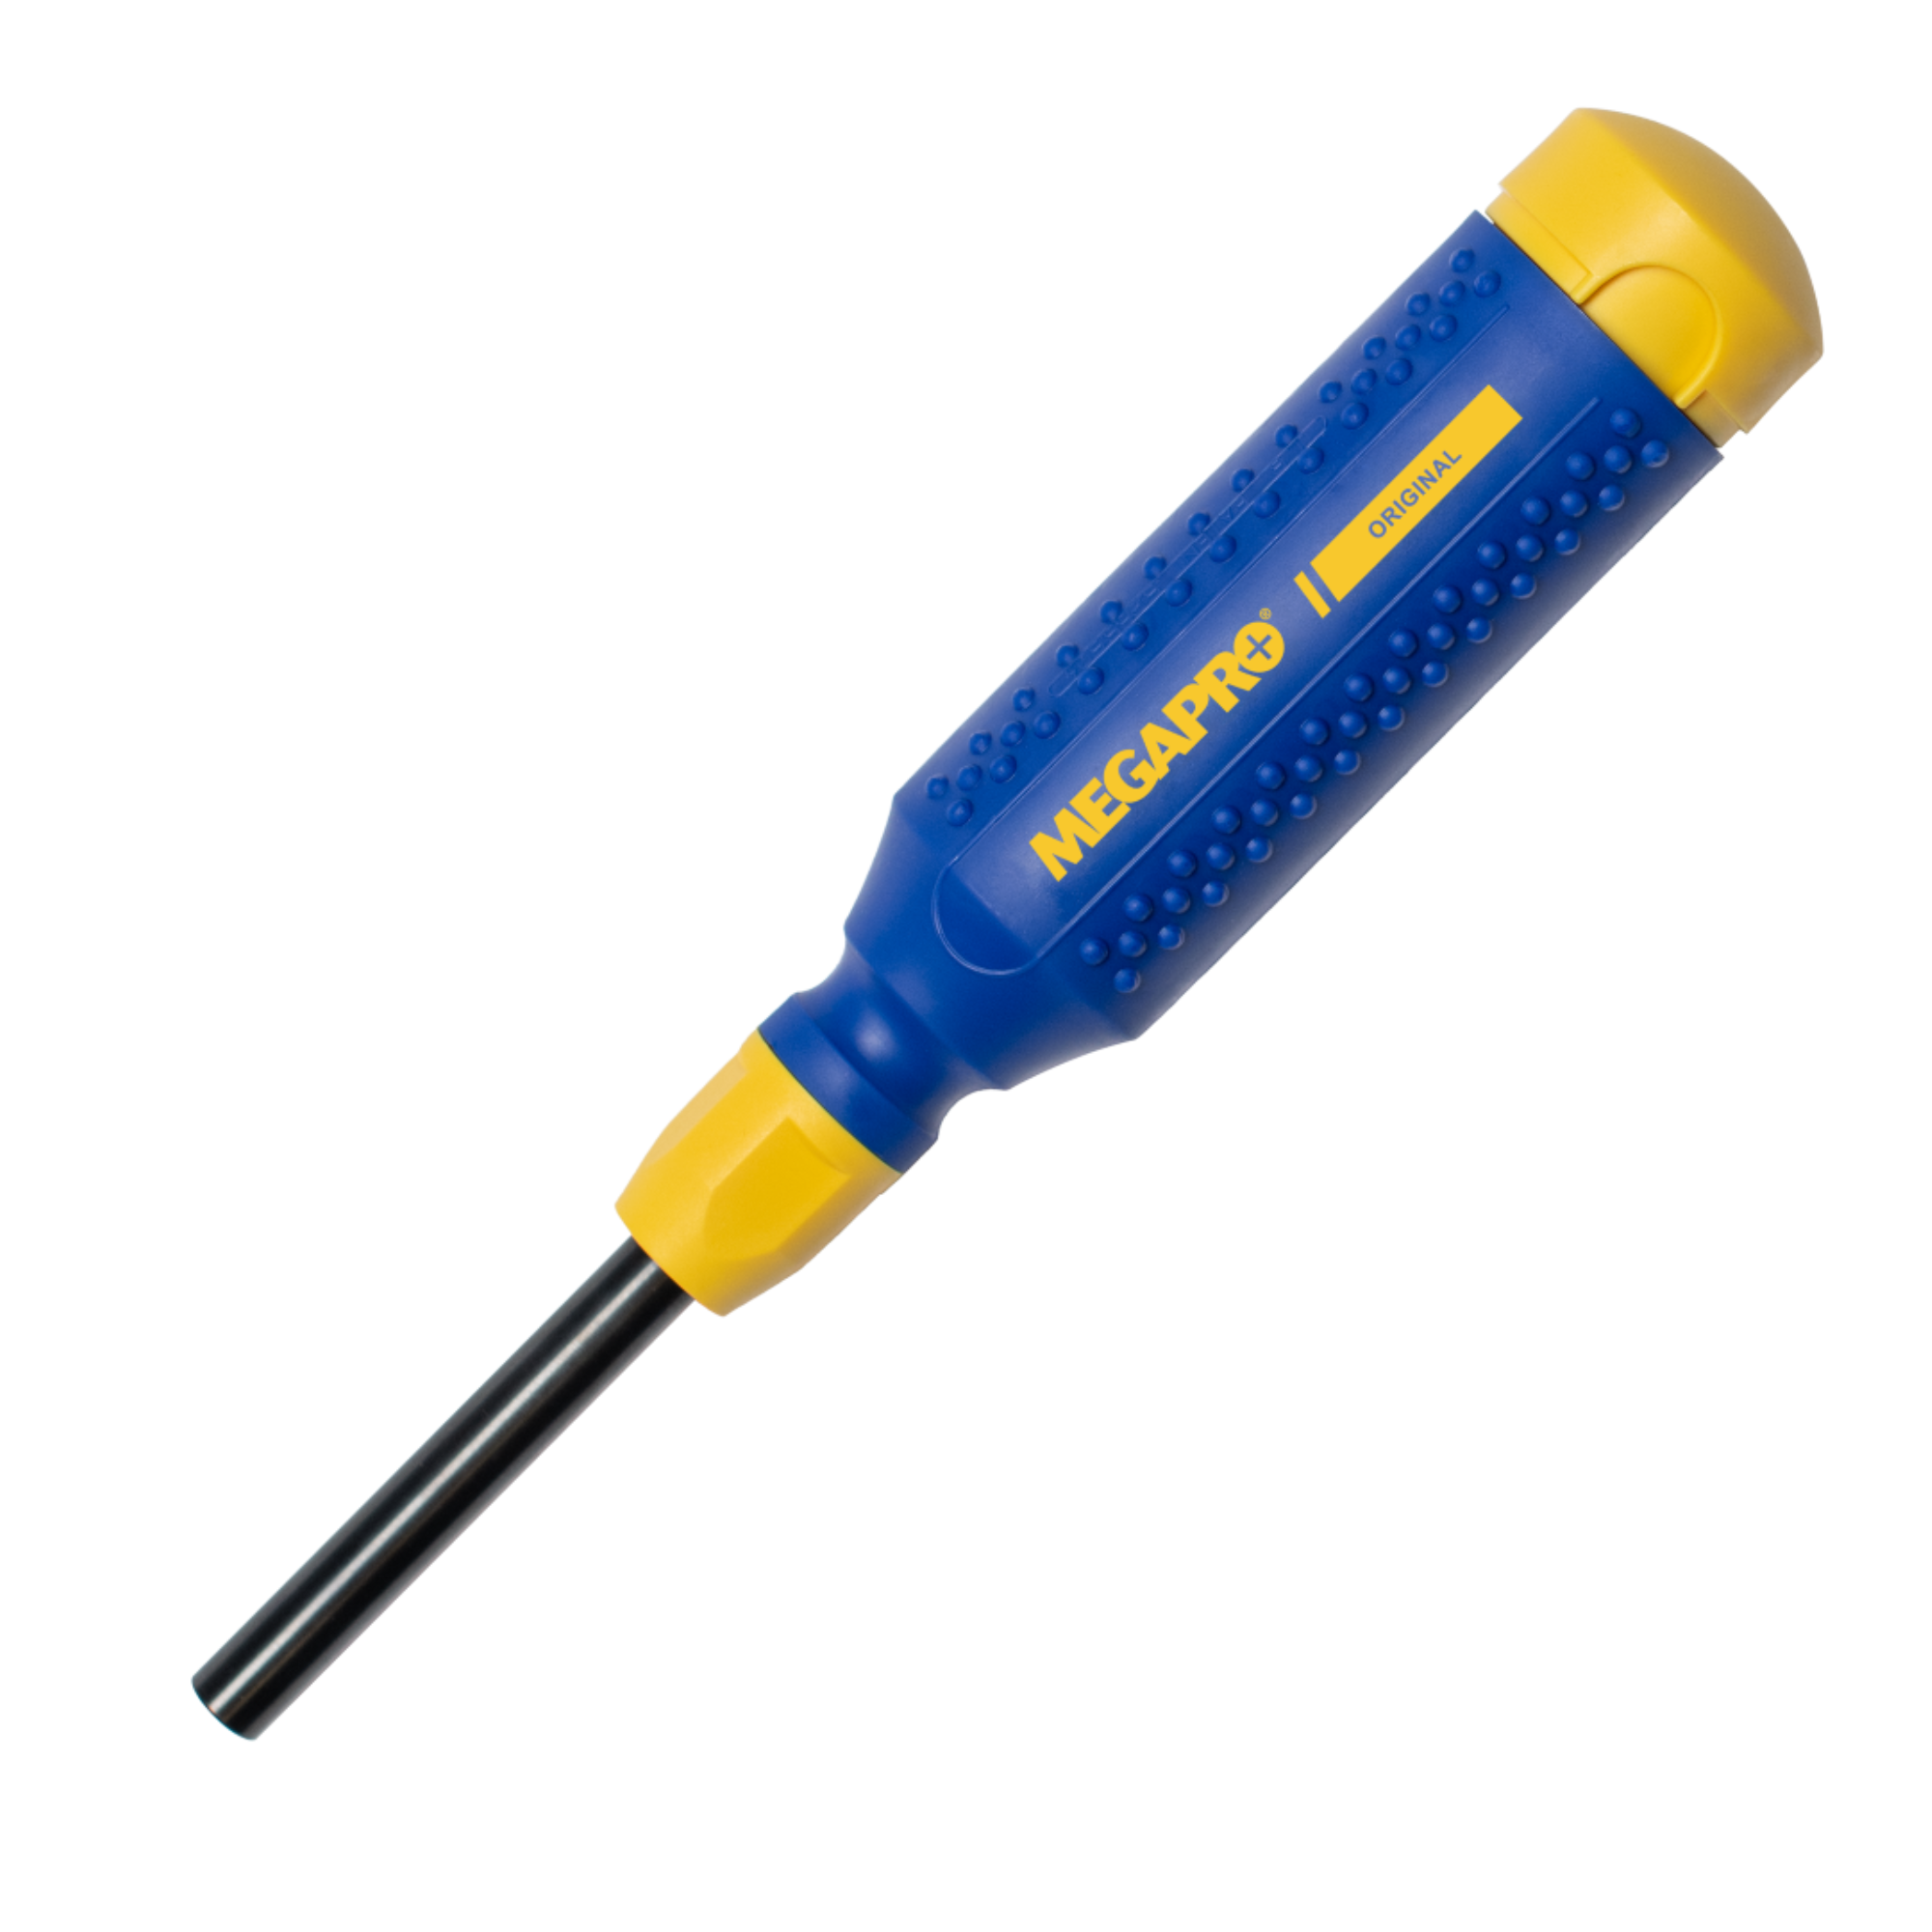 Noyafa N30 Precise Electric Screwdriver Pen, Tools